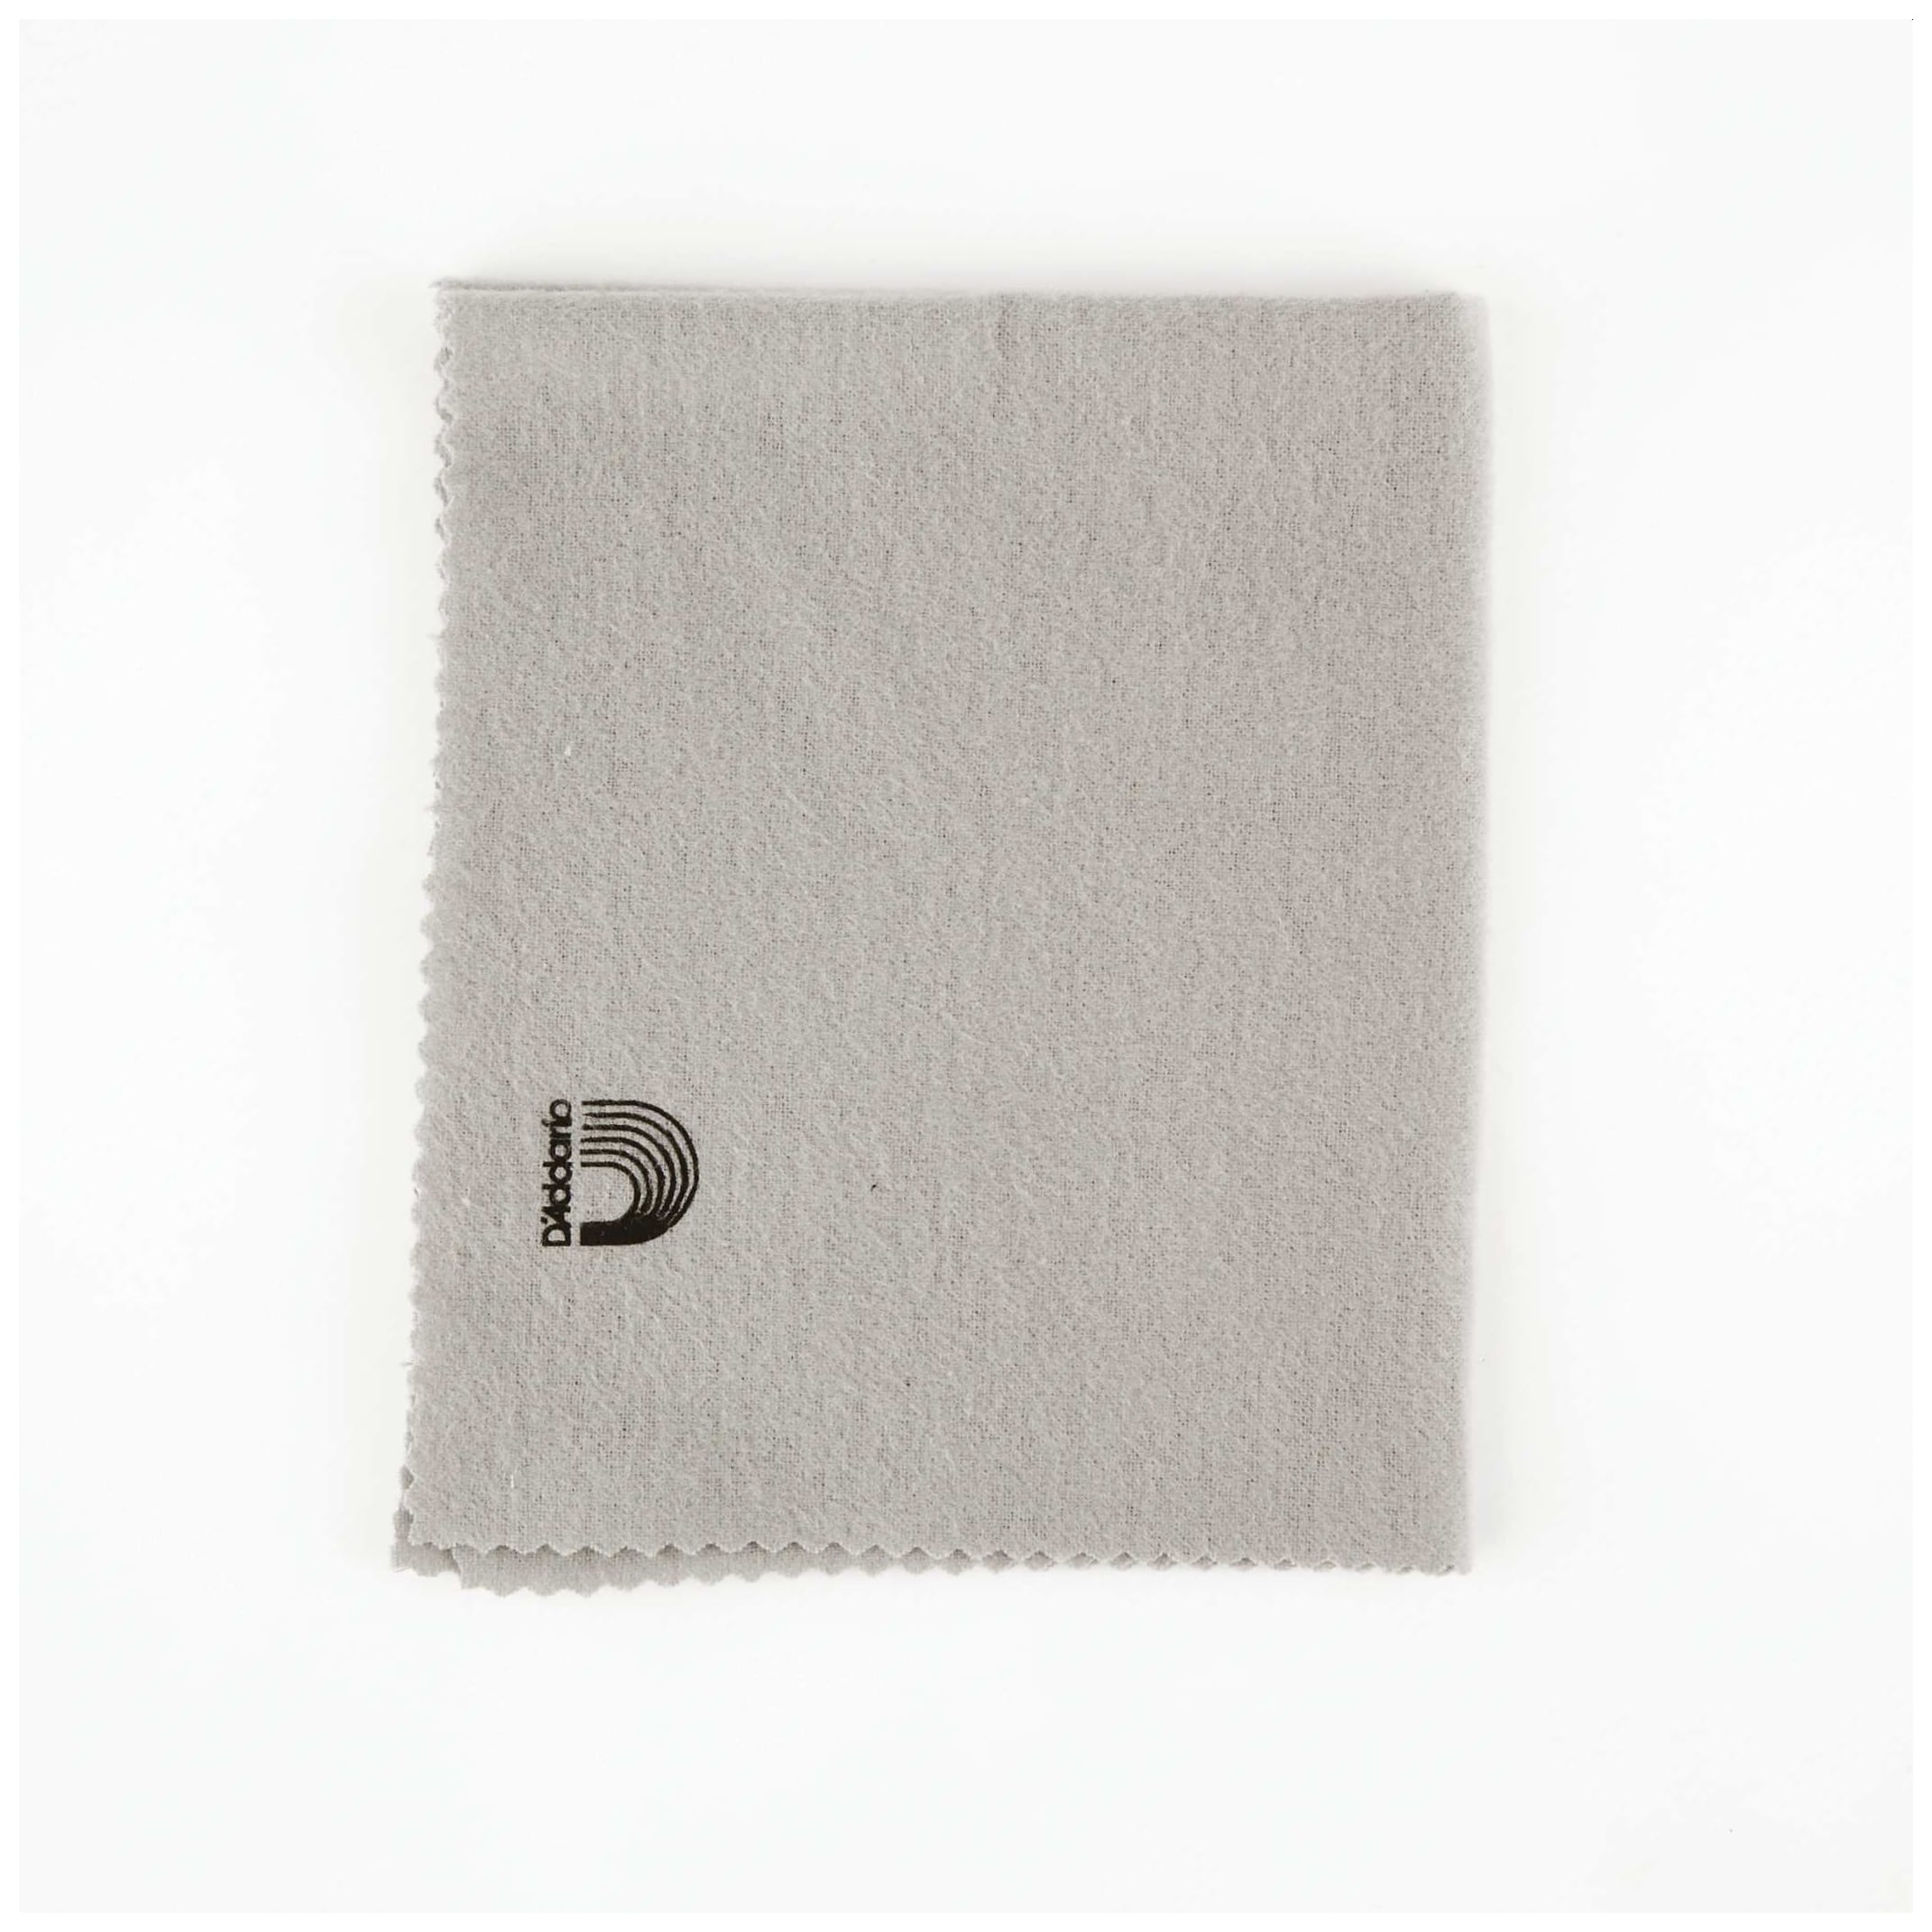 D’Addario PWPC1 - Pre-Treated Polish Cloth